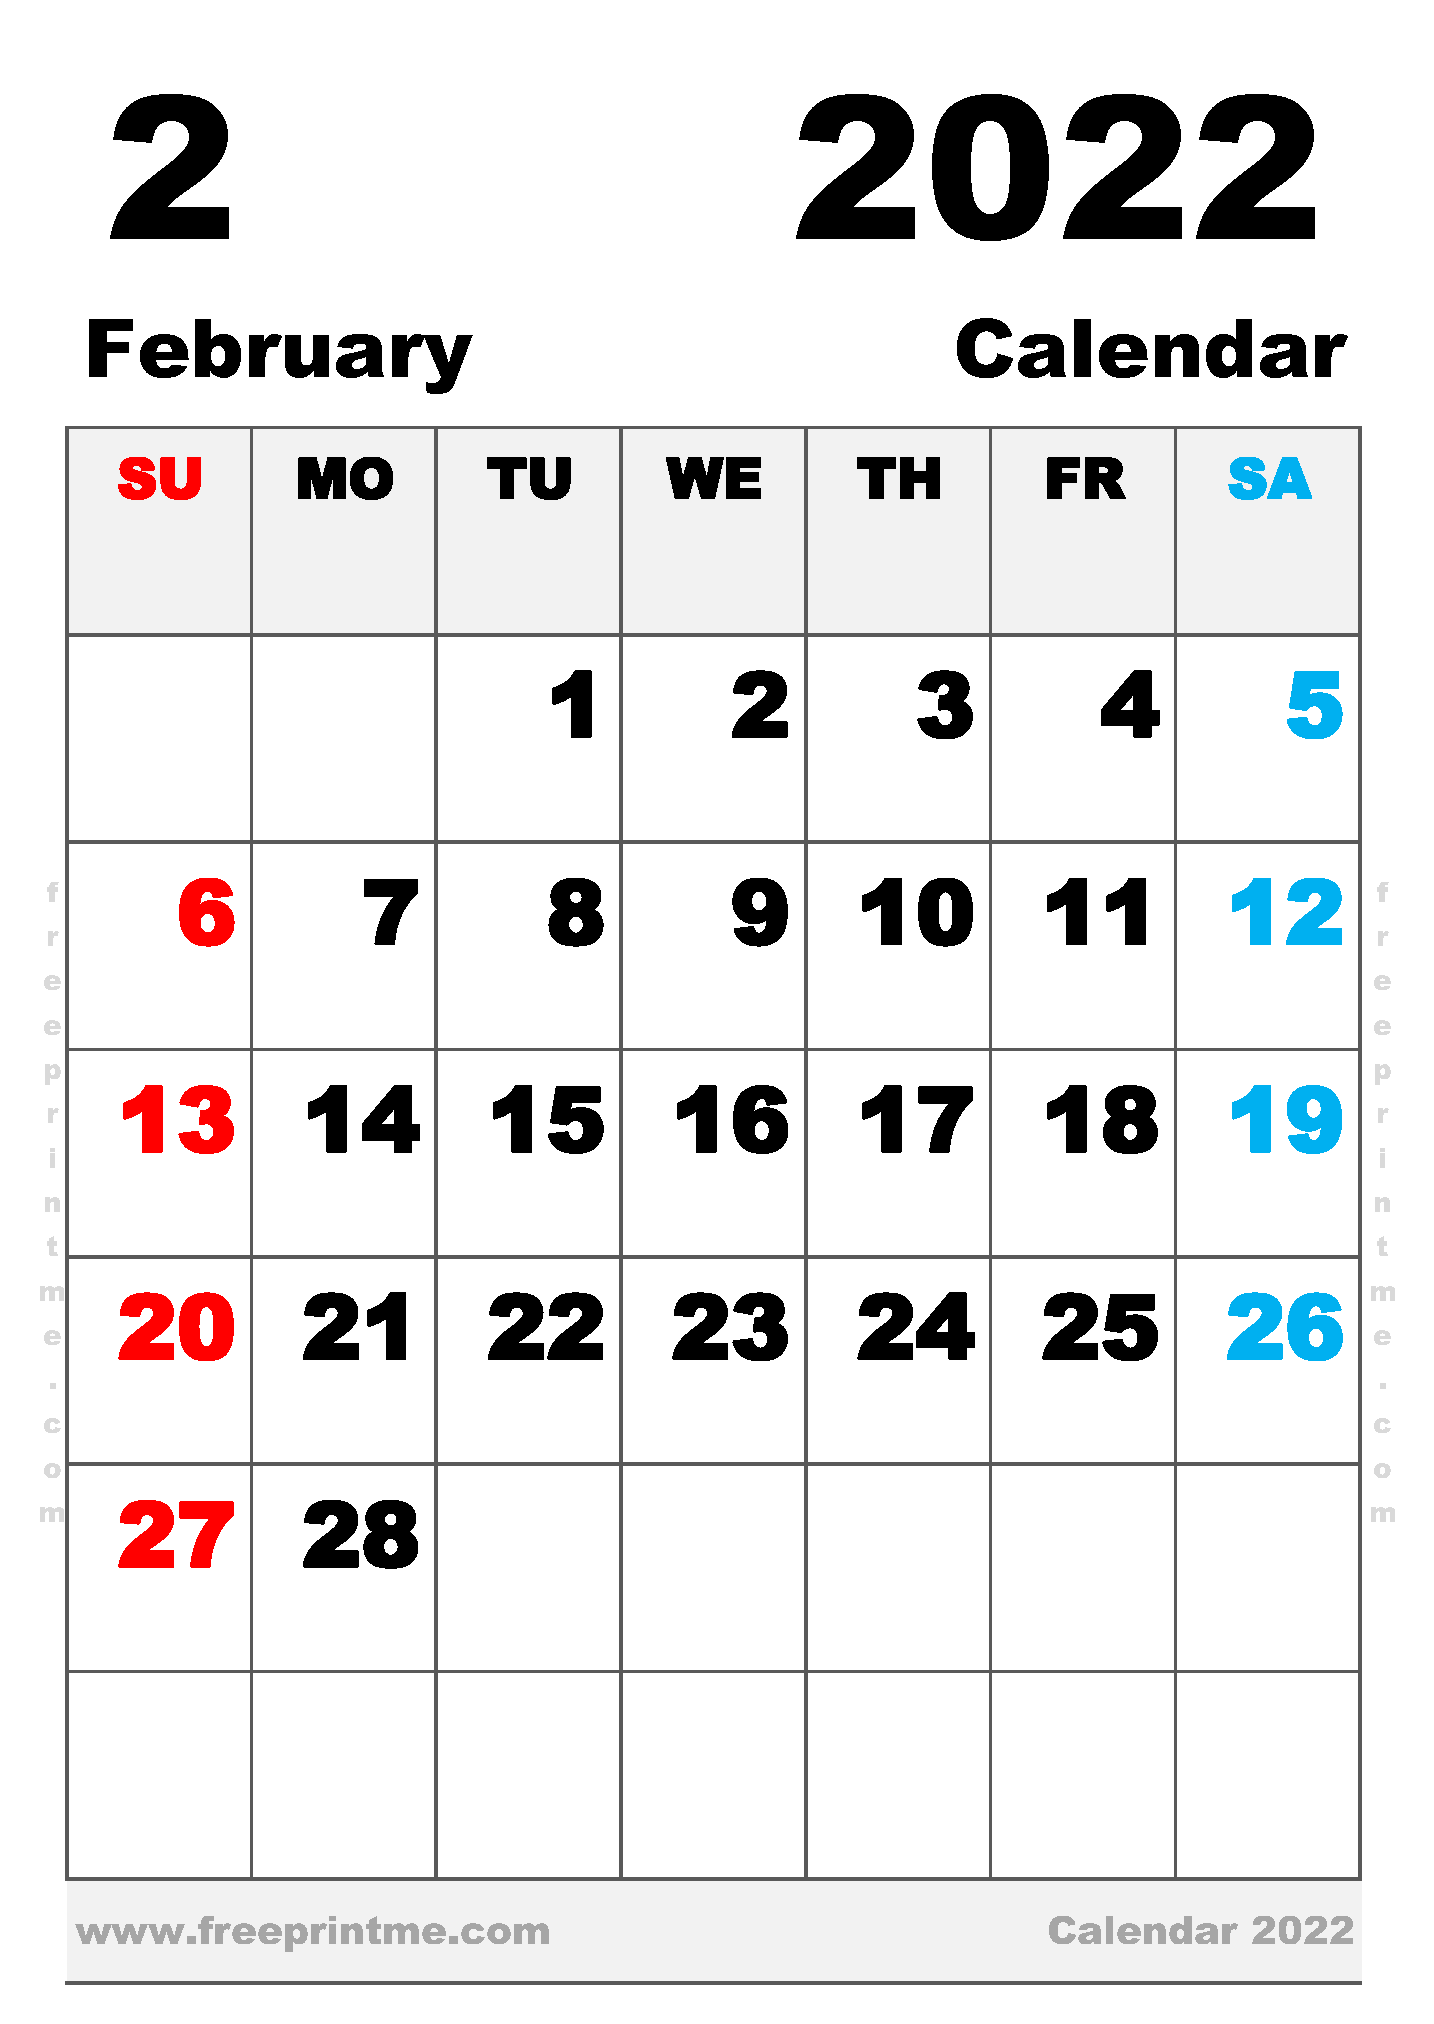 Free Printable February 2022 Calendar B5